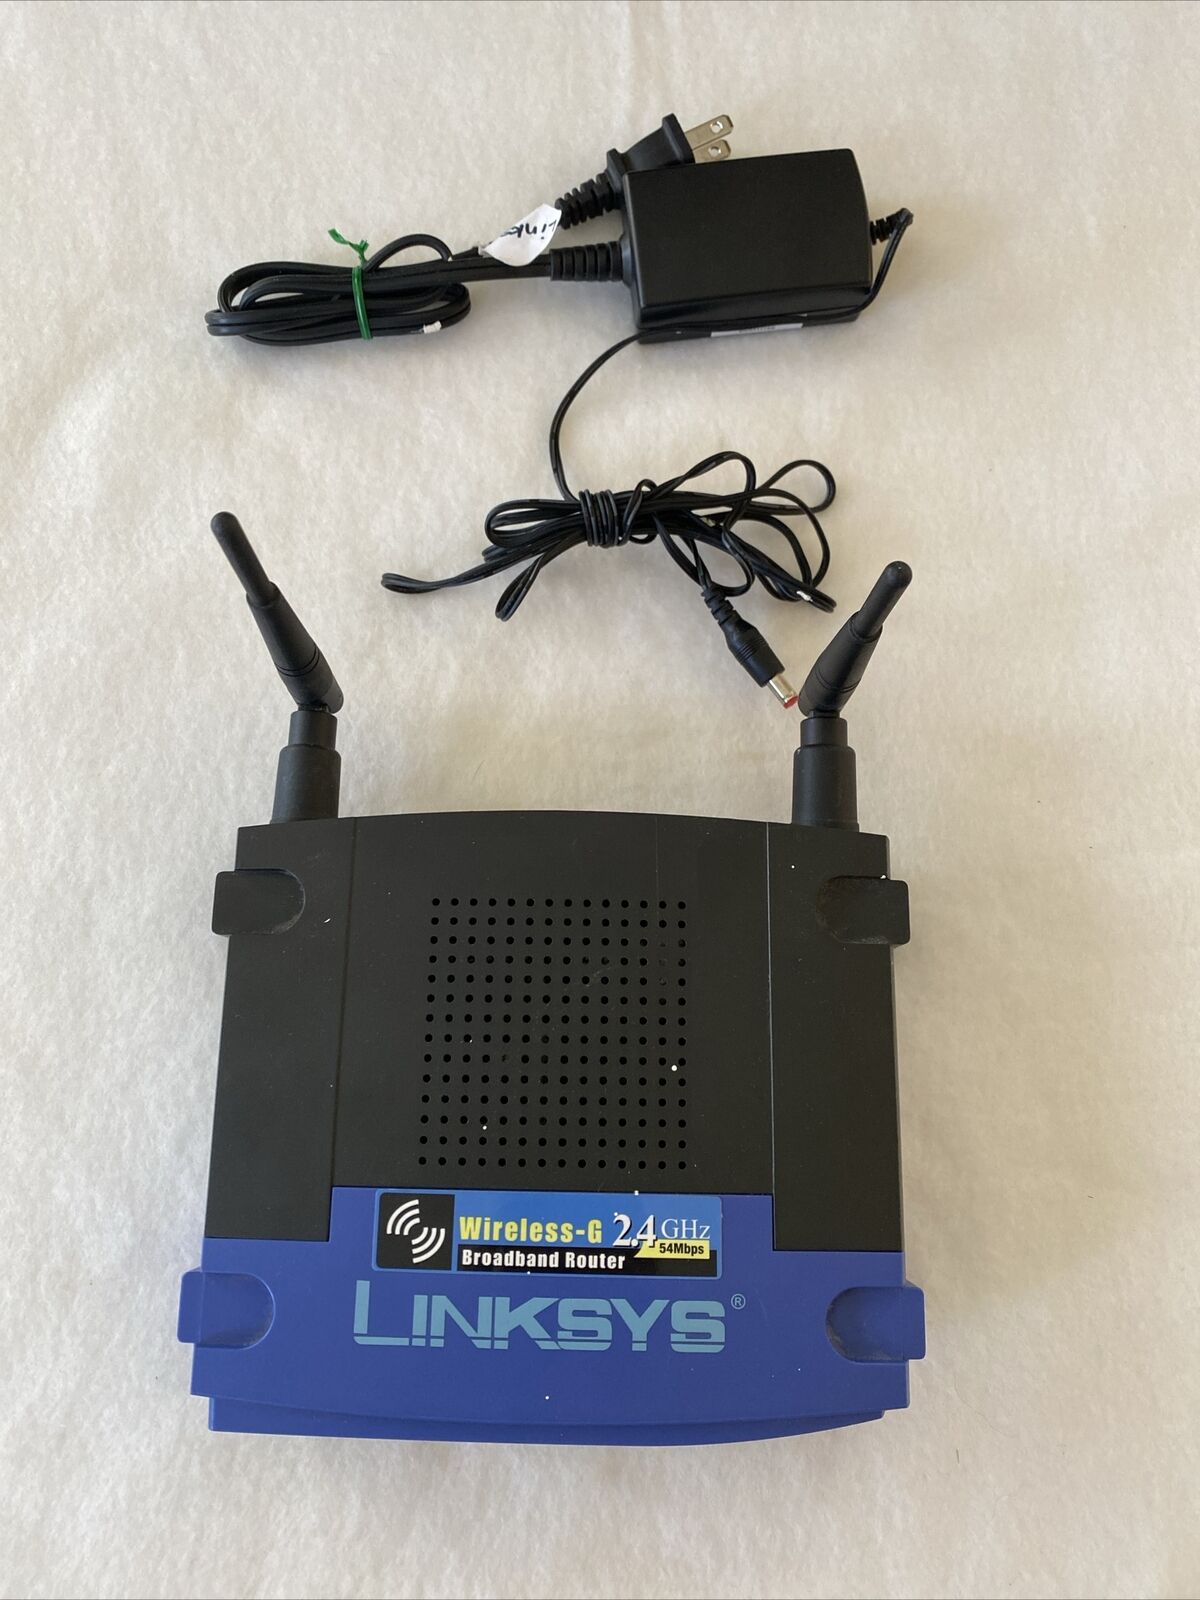 Linksys Wireless G Broadband Router 54 Mbps WRT54G 2.4 GHz 4 PORT Ethernet V6